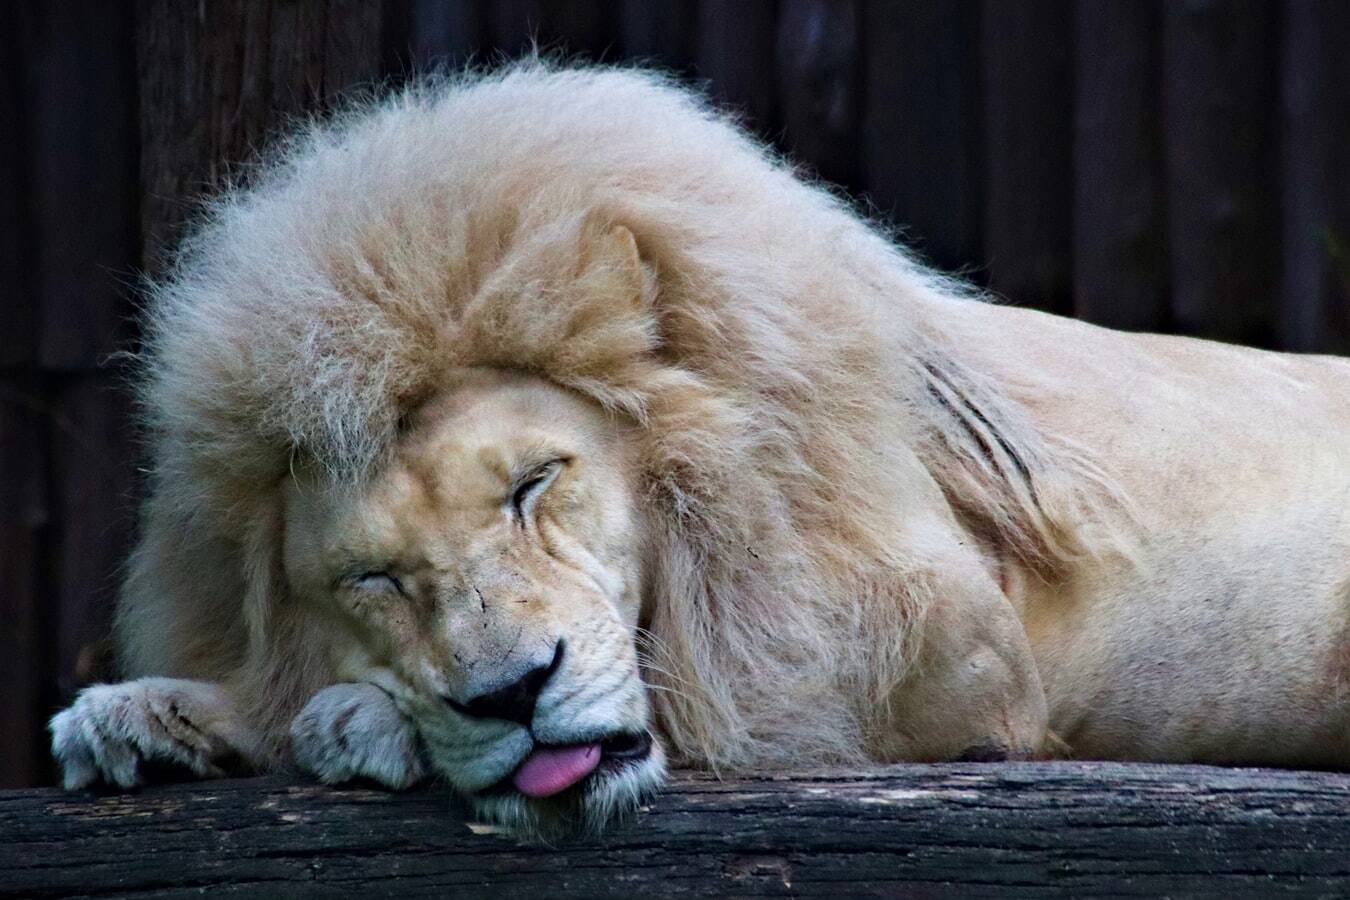 A lion sleeping deeply